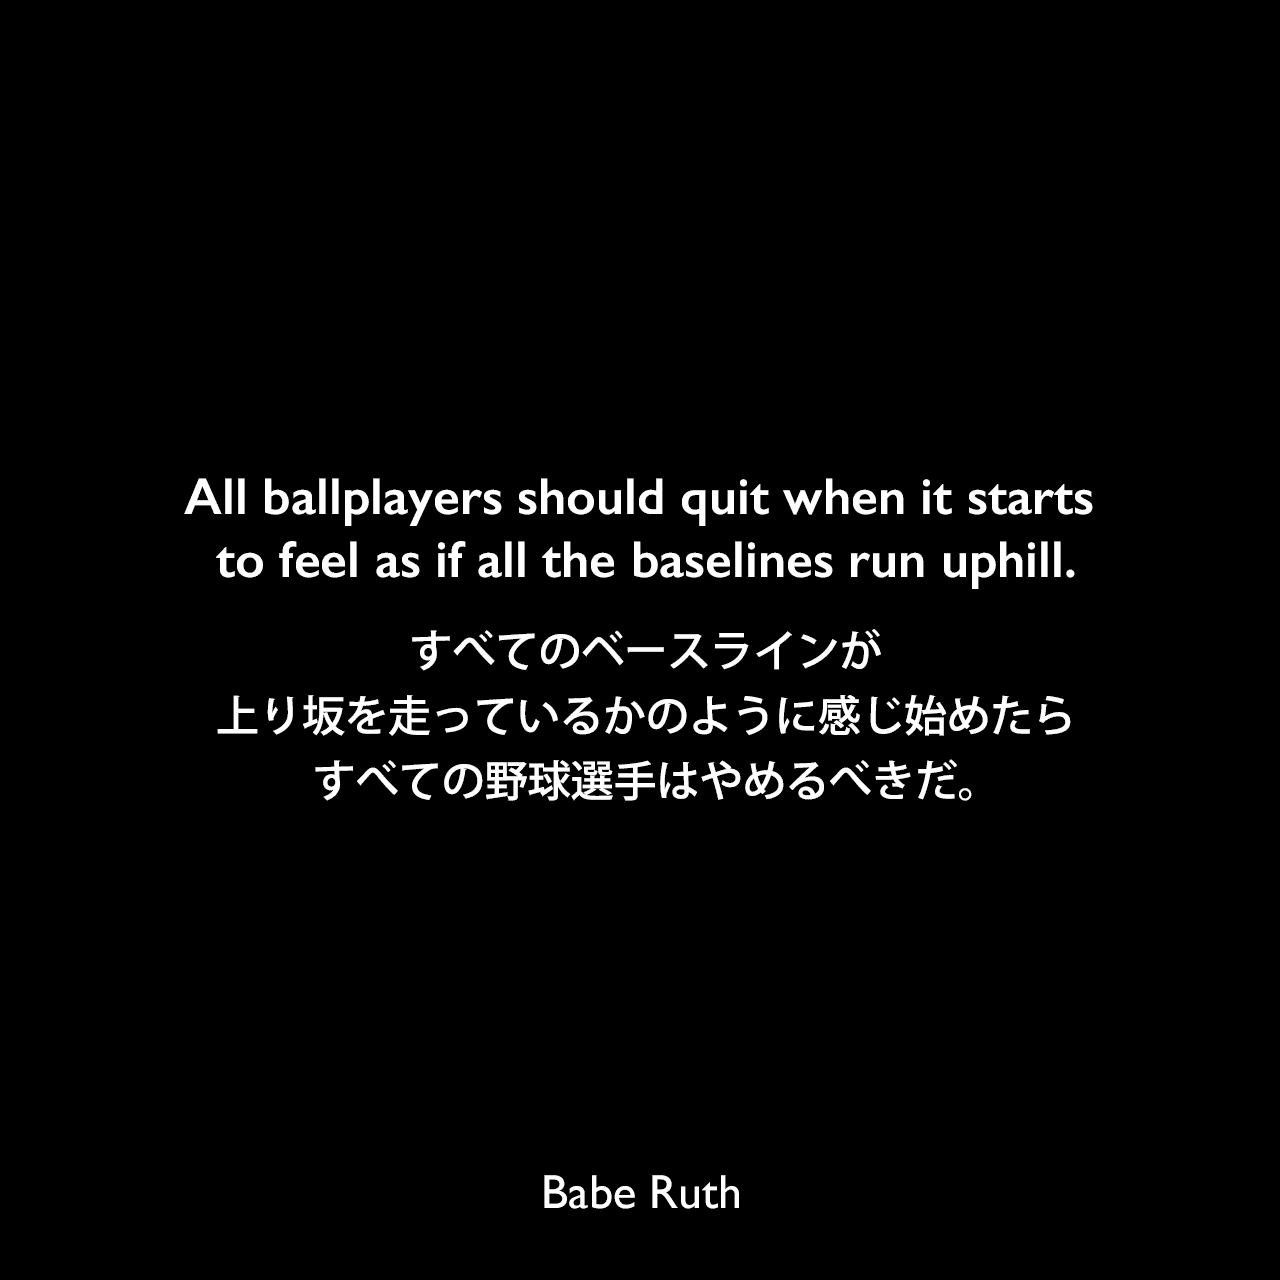 All ballplayers should quit when it starts to feel as if all the baselines run uphill.すべてのベースラインが上り坂を走っているかのように感じ始めたら、すべての野球選手はやめるべきだ。Babe Ruth